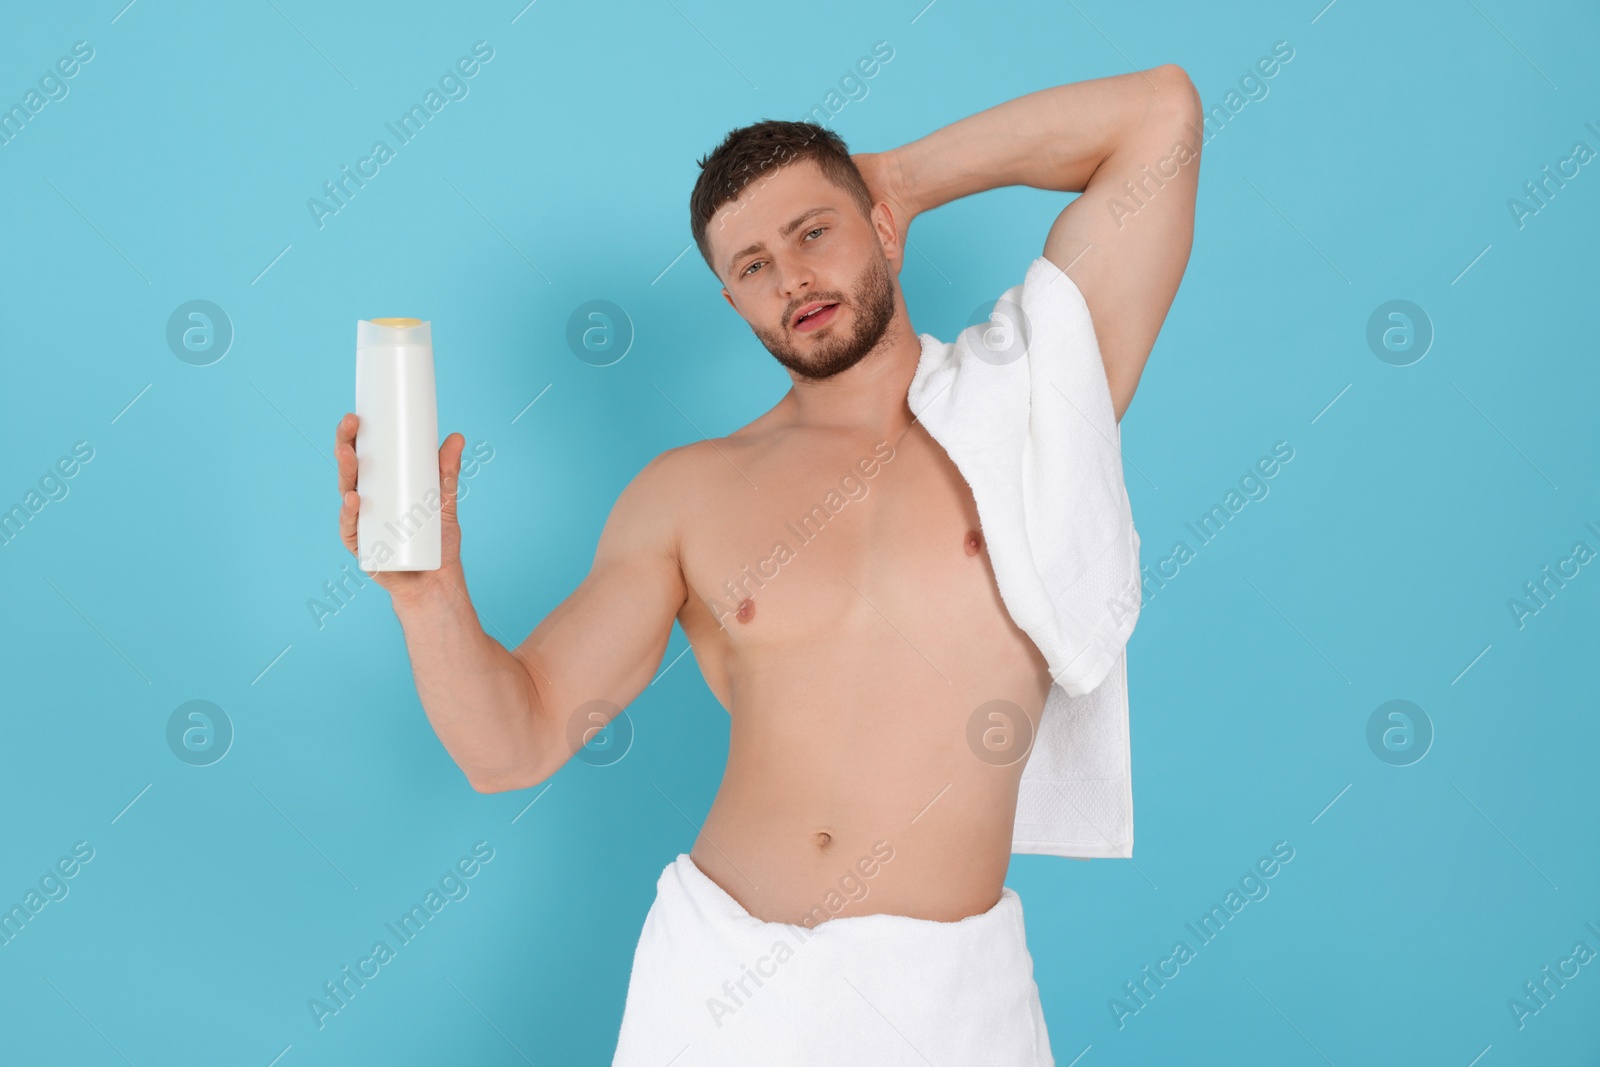 Photo of Shirtless young man holding bottle of shampoo on light blue background